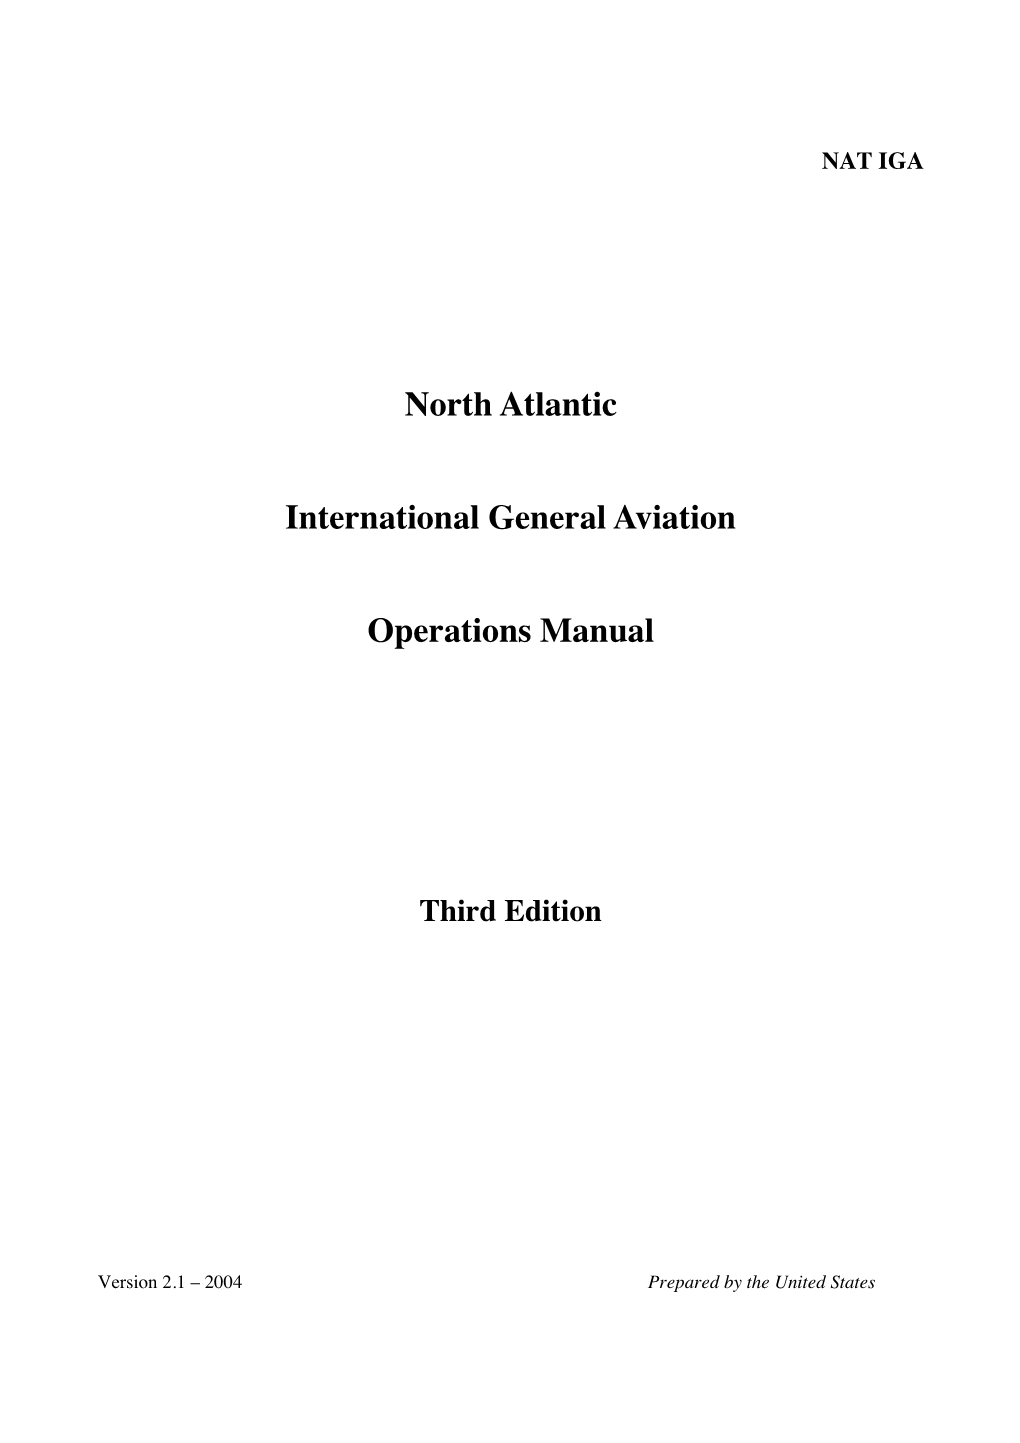 North Atlantic International General Aviation Operations Manual U.S